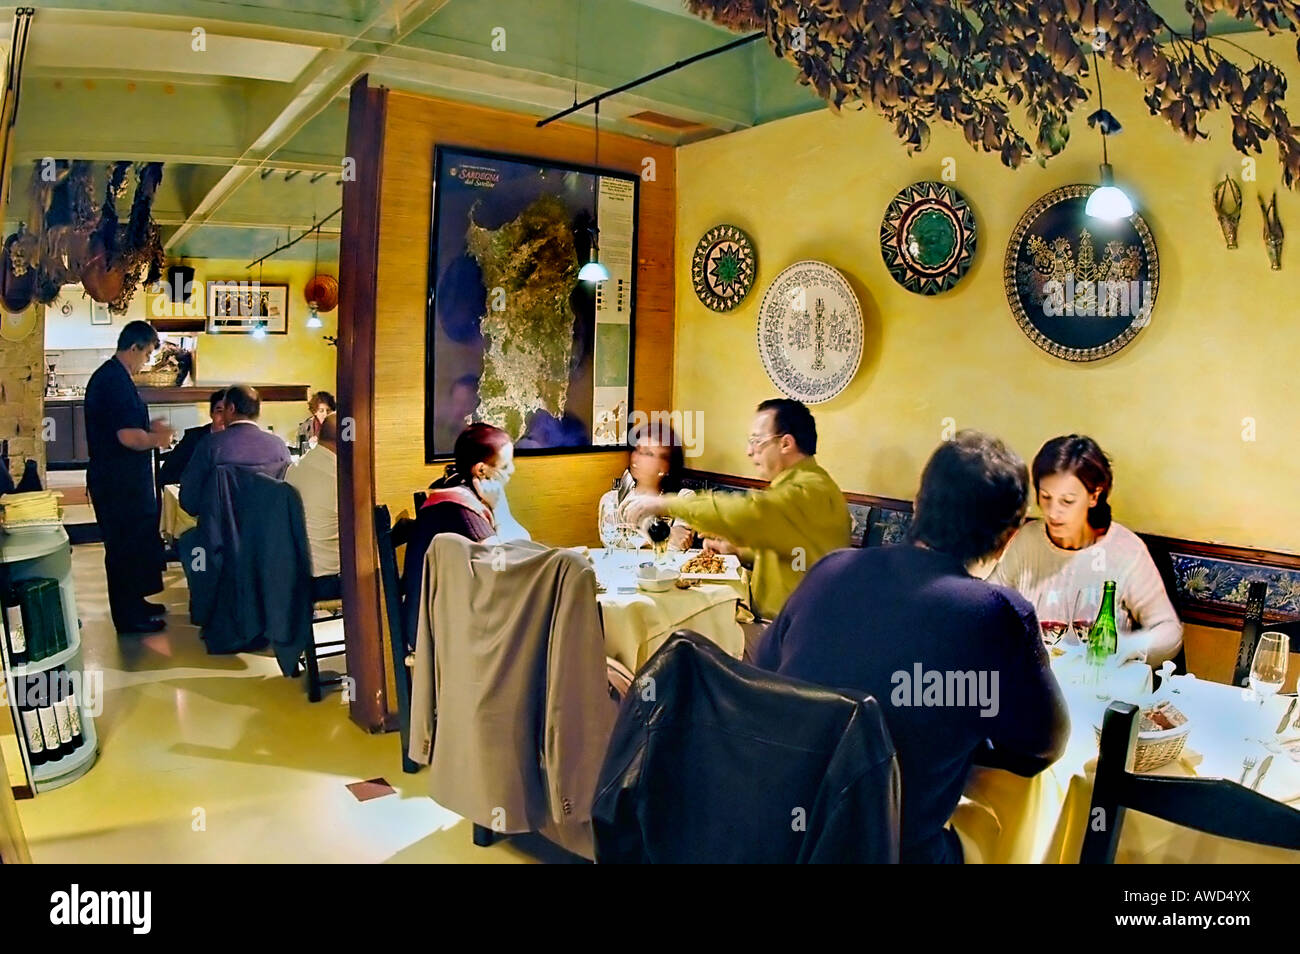 PARIS France, People Sharing Meals in 'Sardegna a Tavola' 'Italian Restaurant' inside, romantic restaurant interior Stock Photo